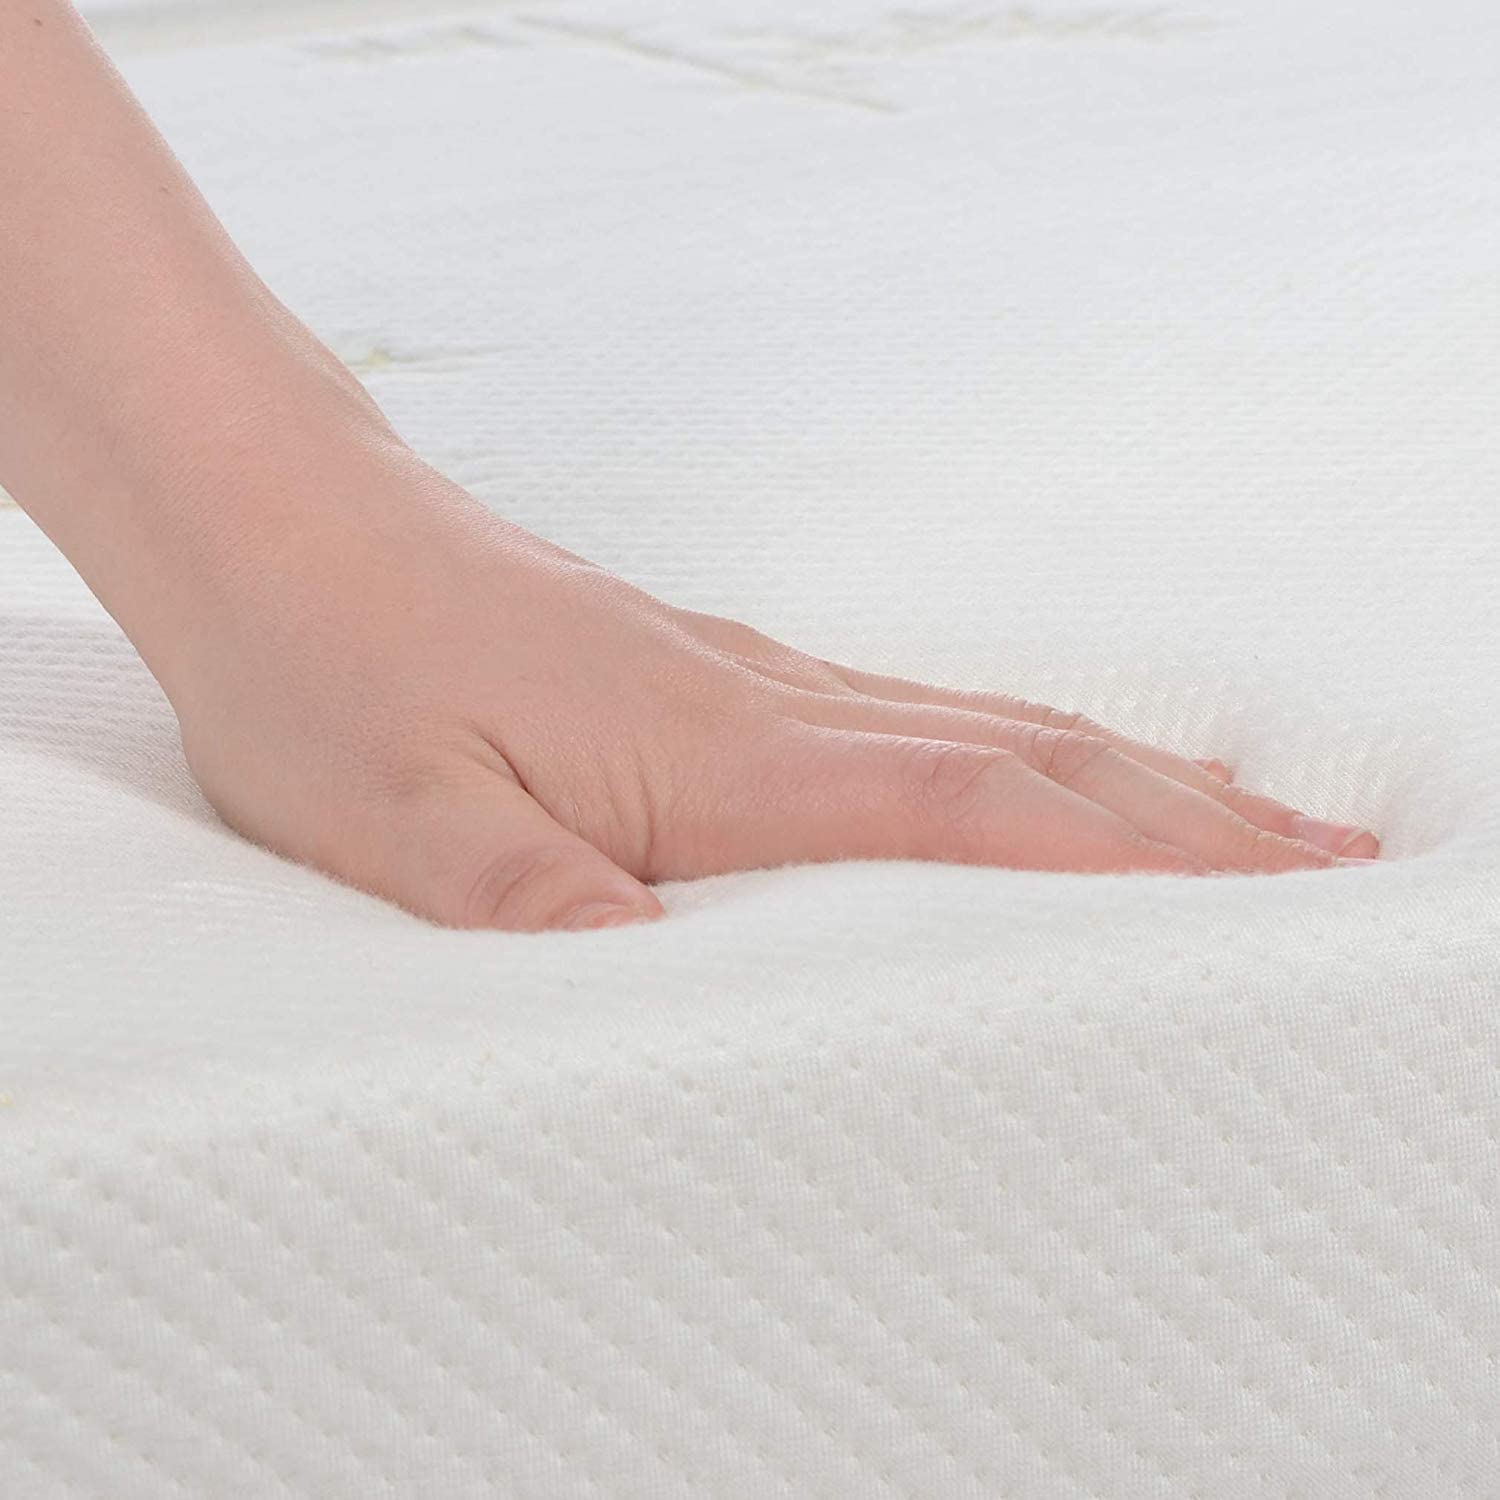 Milliard 4 5 Inch Memory Foam Replacement Mattress For Queen Size Sleeper Sofa